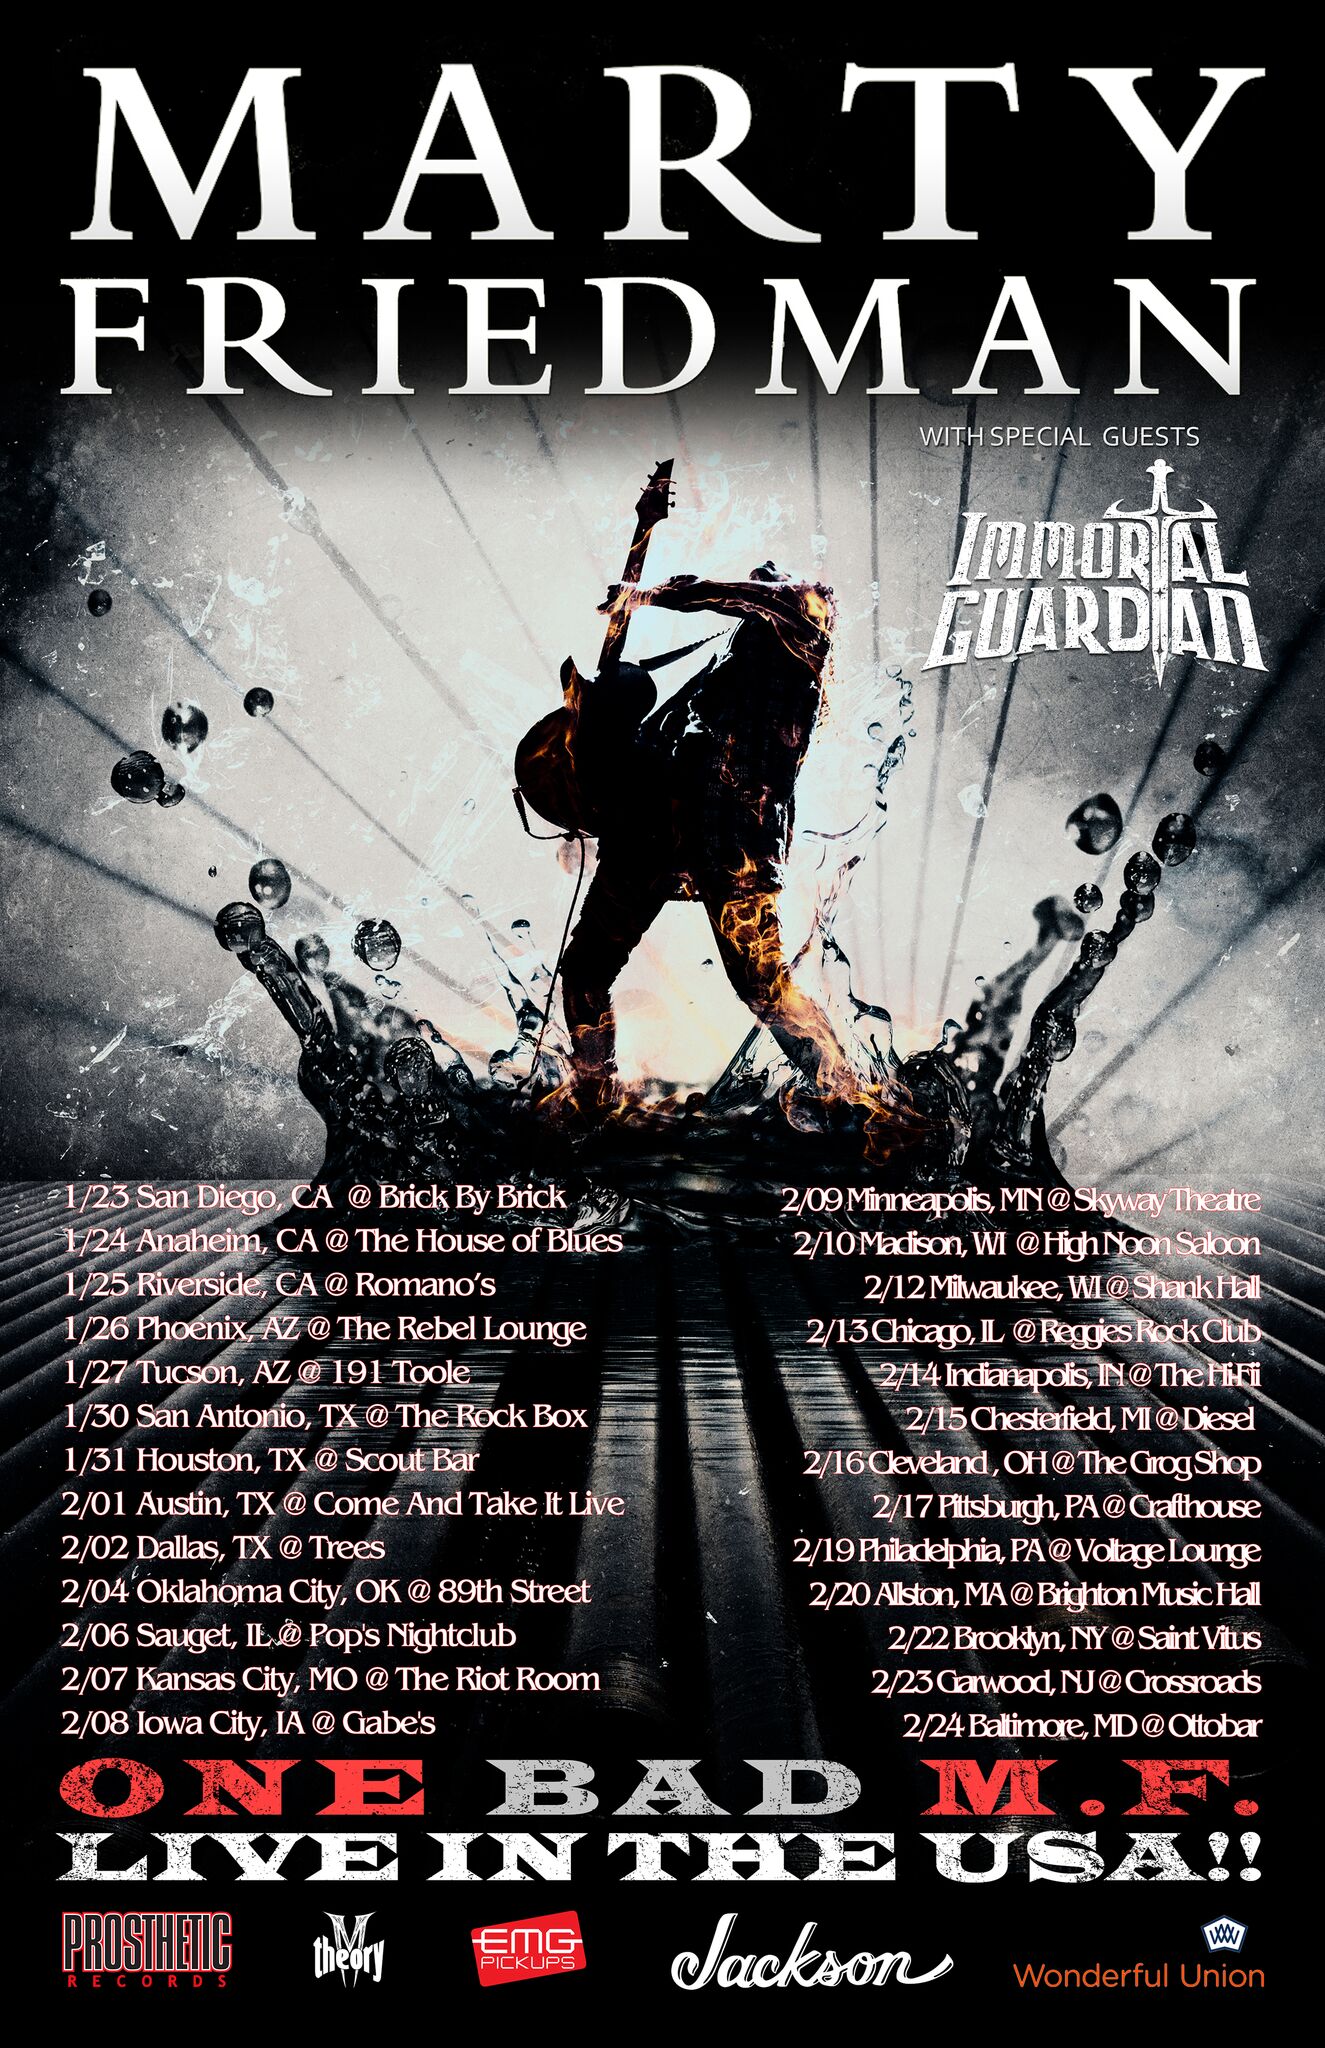 Marty Friedman 2019 Tour Dates